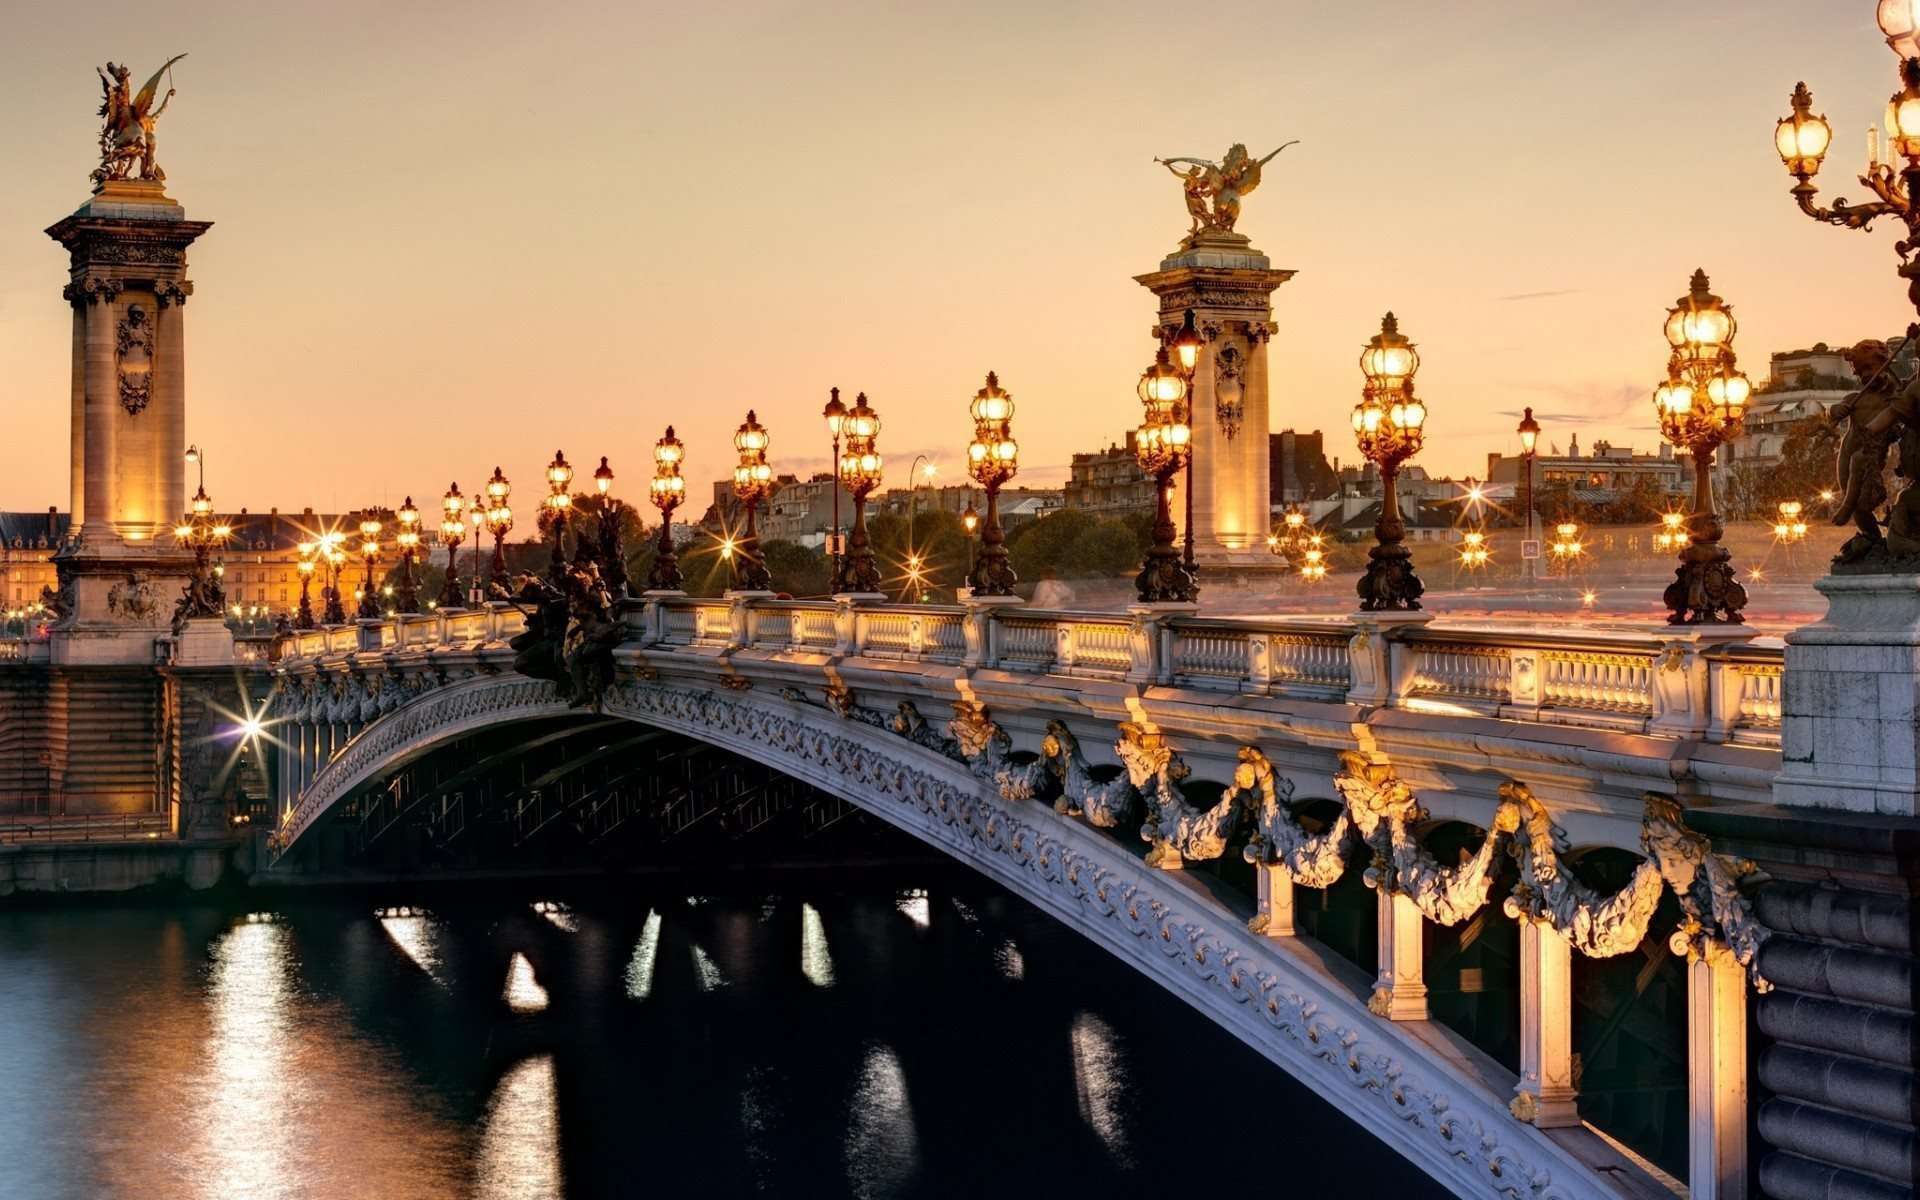 Pont Alexandre Iii France Wallpaper Hd Widescreen High Quality